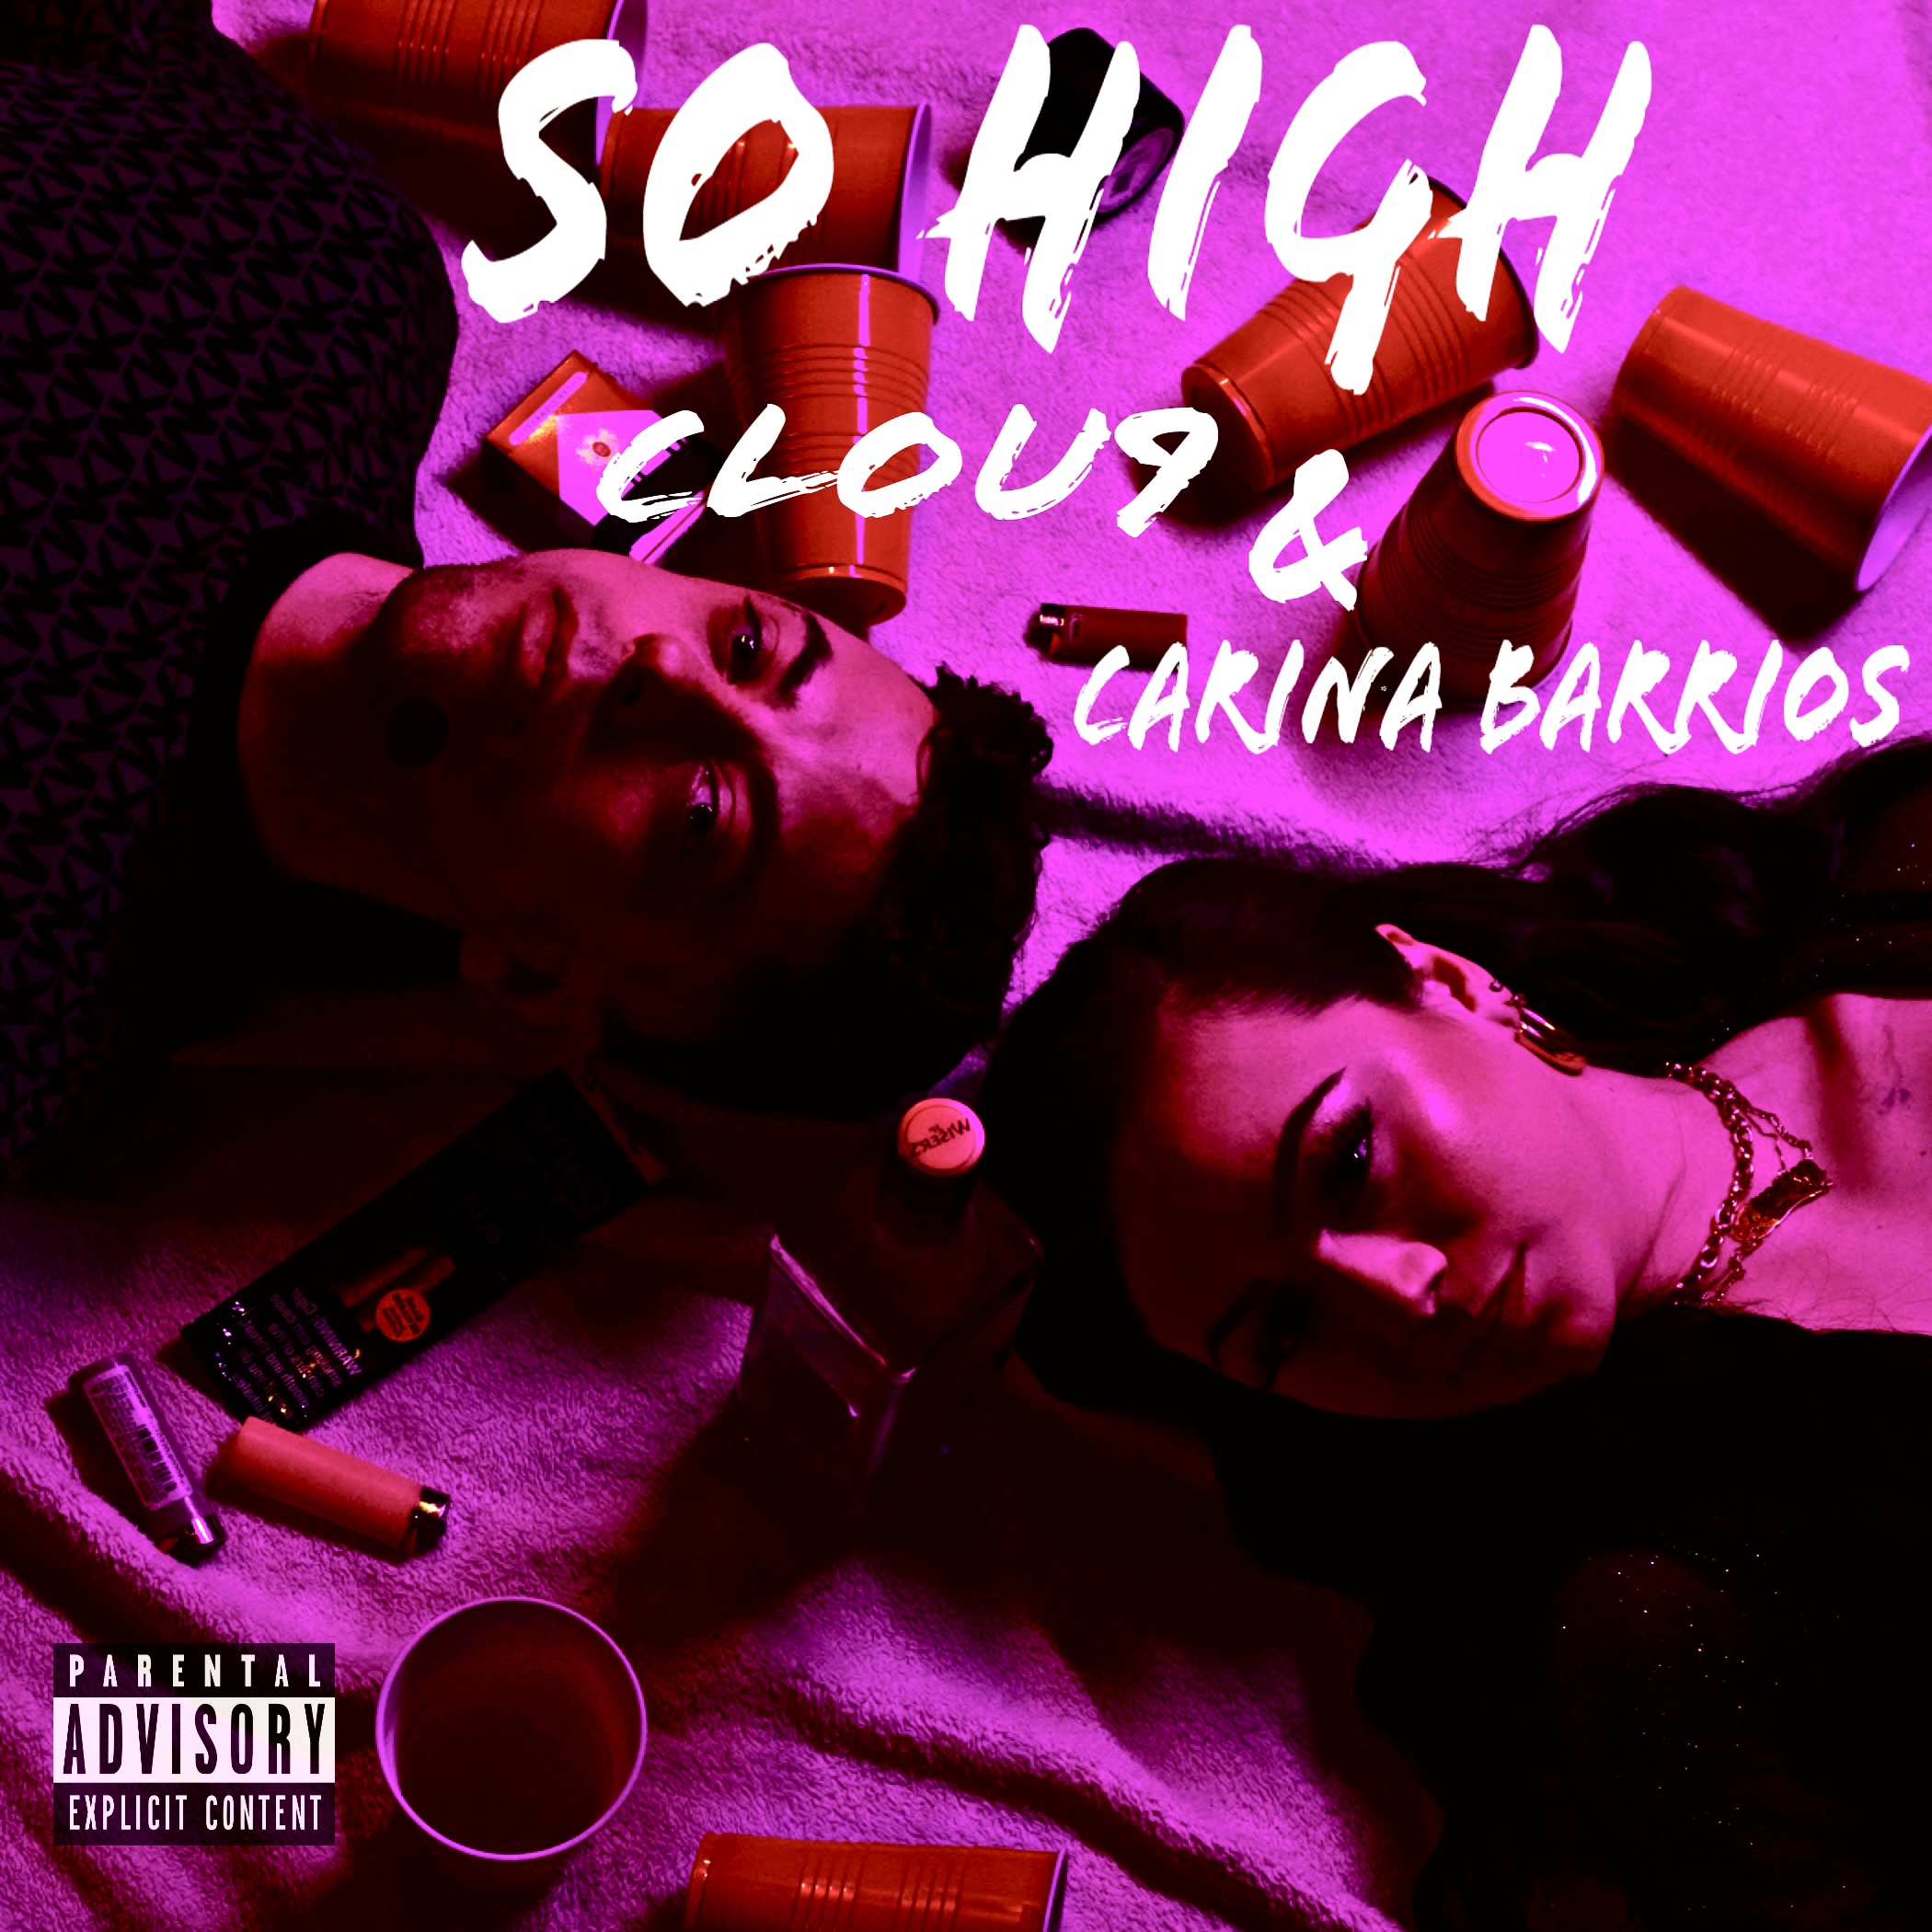 Clou9 - “So High” (Feat. Carina Barrios)